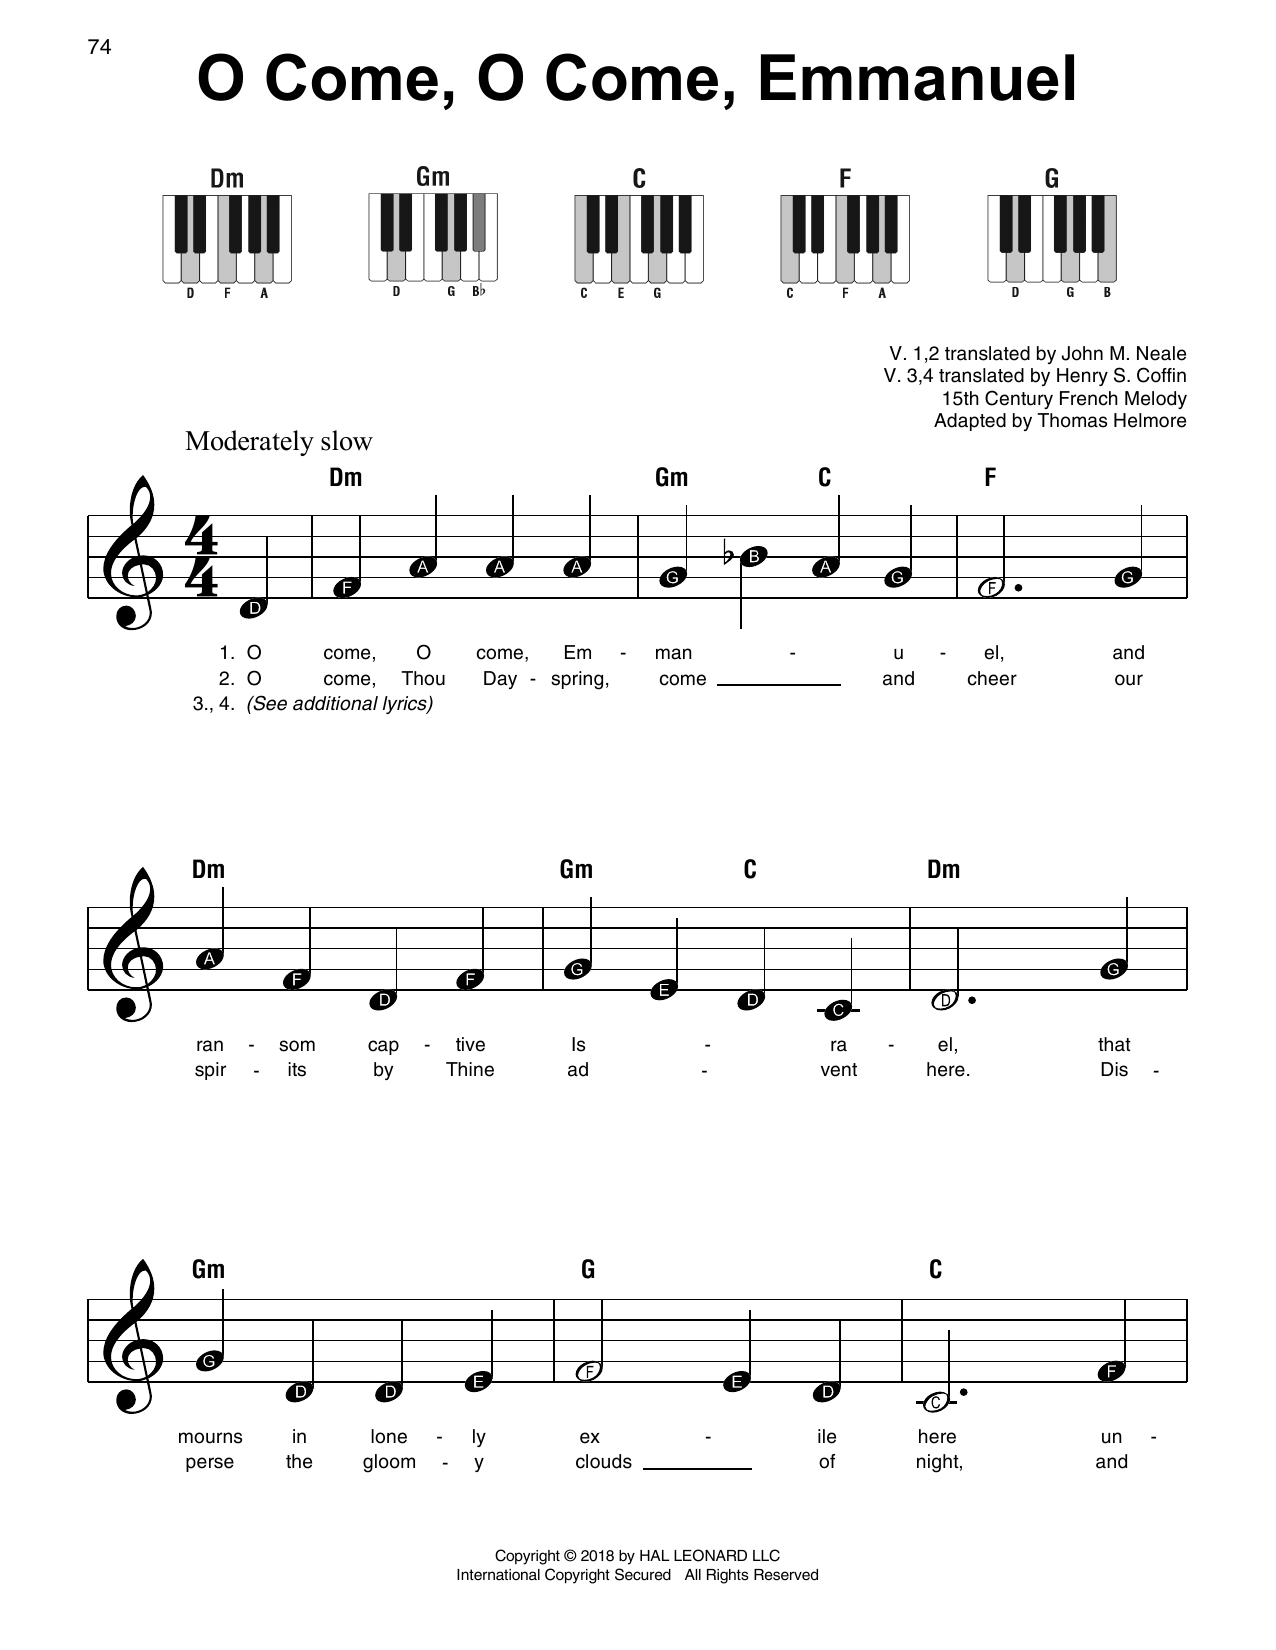 Christmas Carol O Come, O Come, Emmanuel Sheet Music Notes & Chords for Super Easy Piano - Download or Print PDF